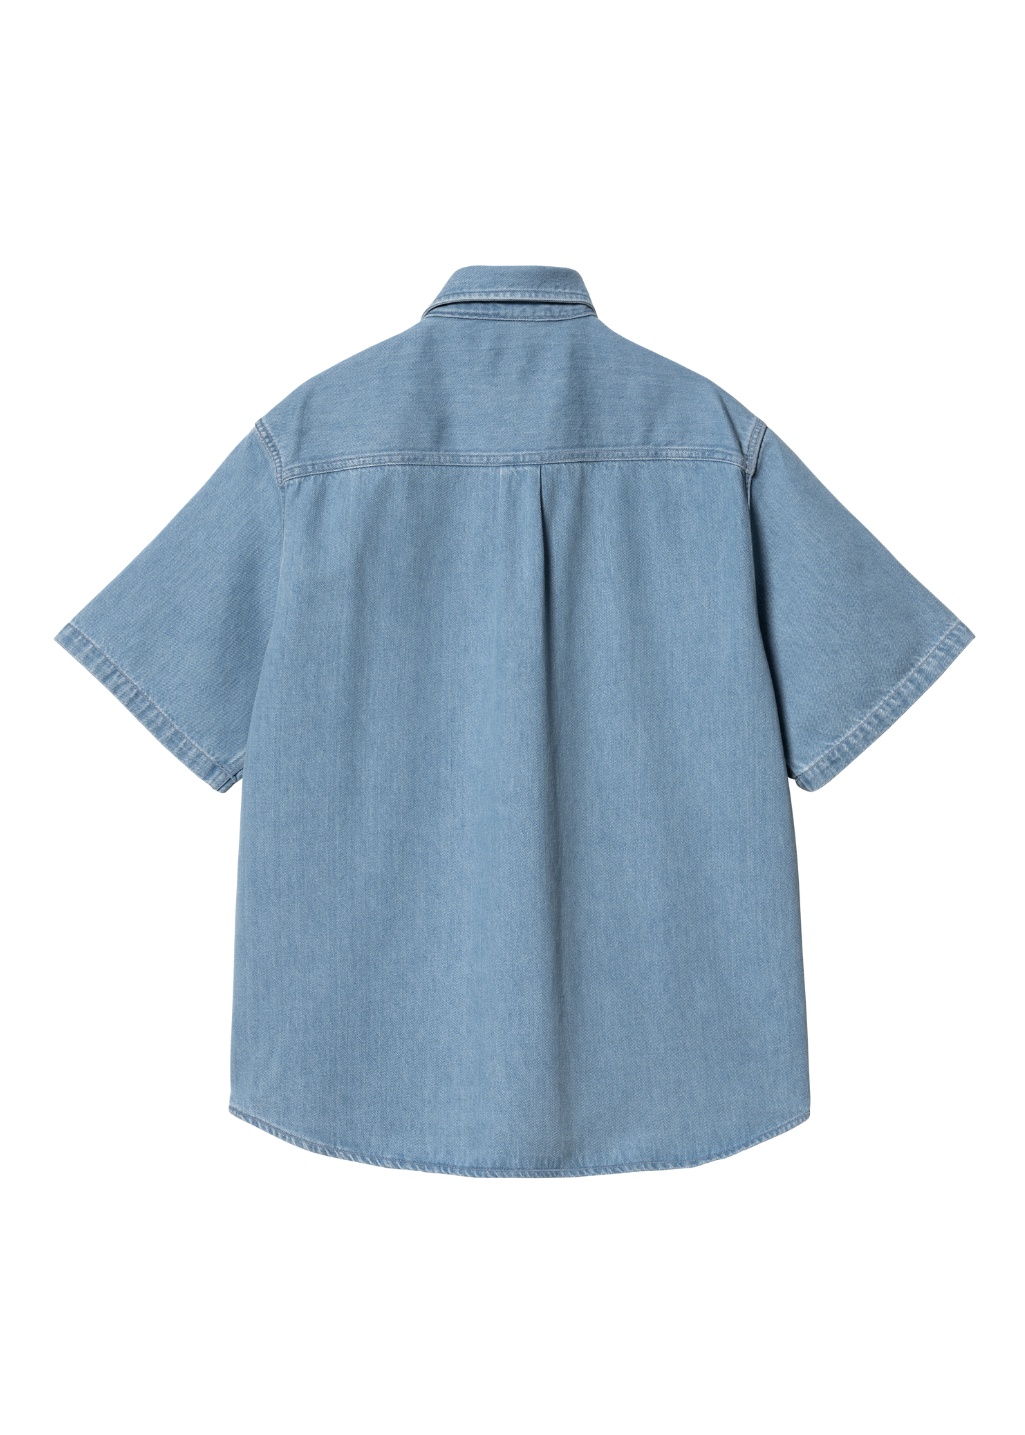 Carhartt WIP - S/S Ody Shirt - Blue Stone Bleached - Hardpressed Print Studio Inc.